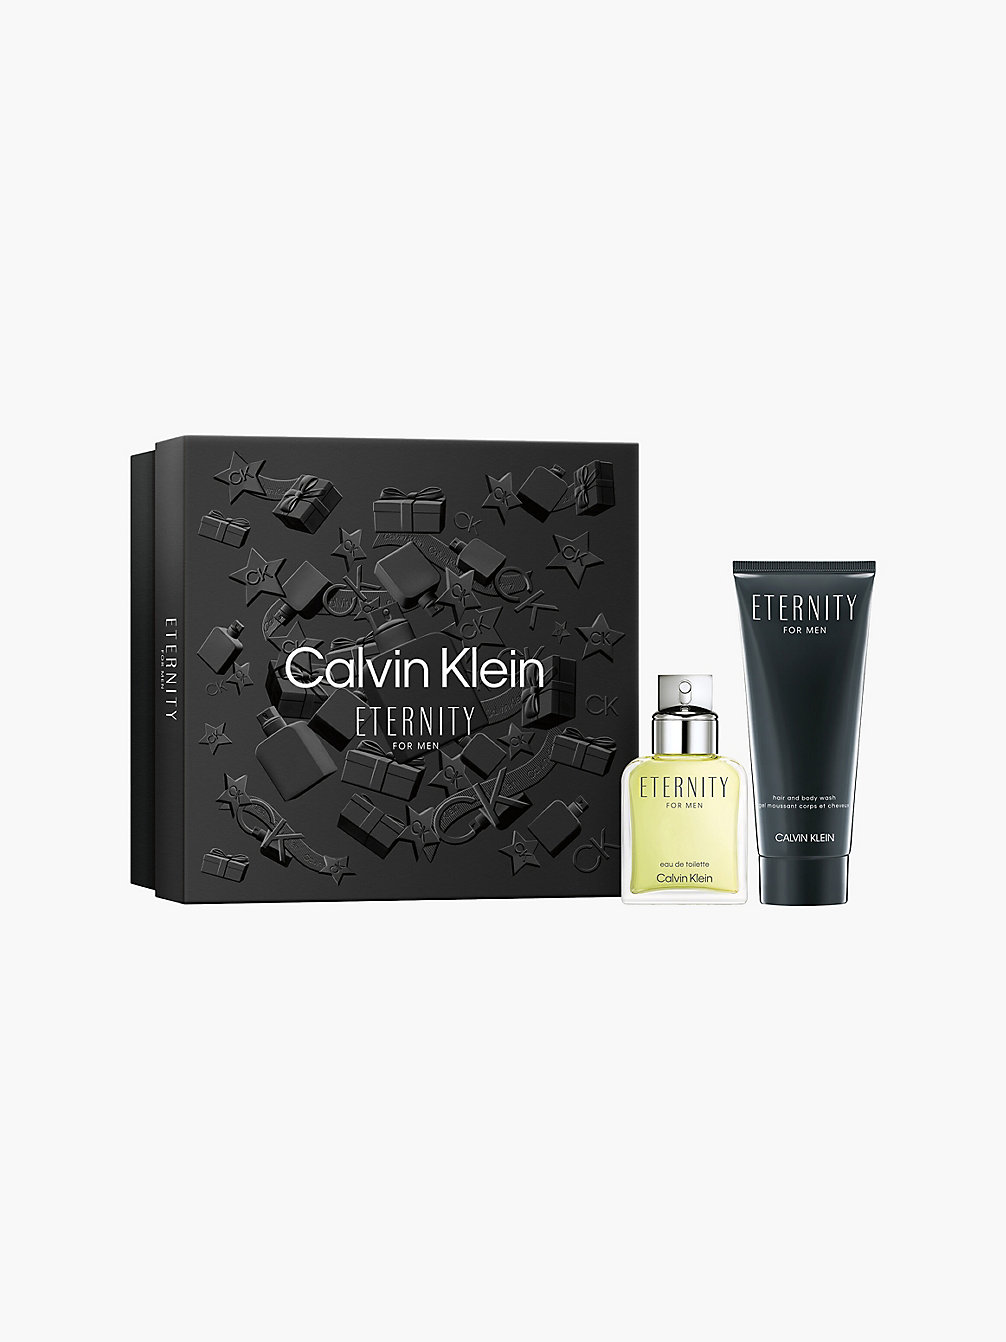 MULTI > Eternity For Men - Eau De Toilette в подарочном наборе > undefined unisex - Calvin Klein